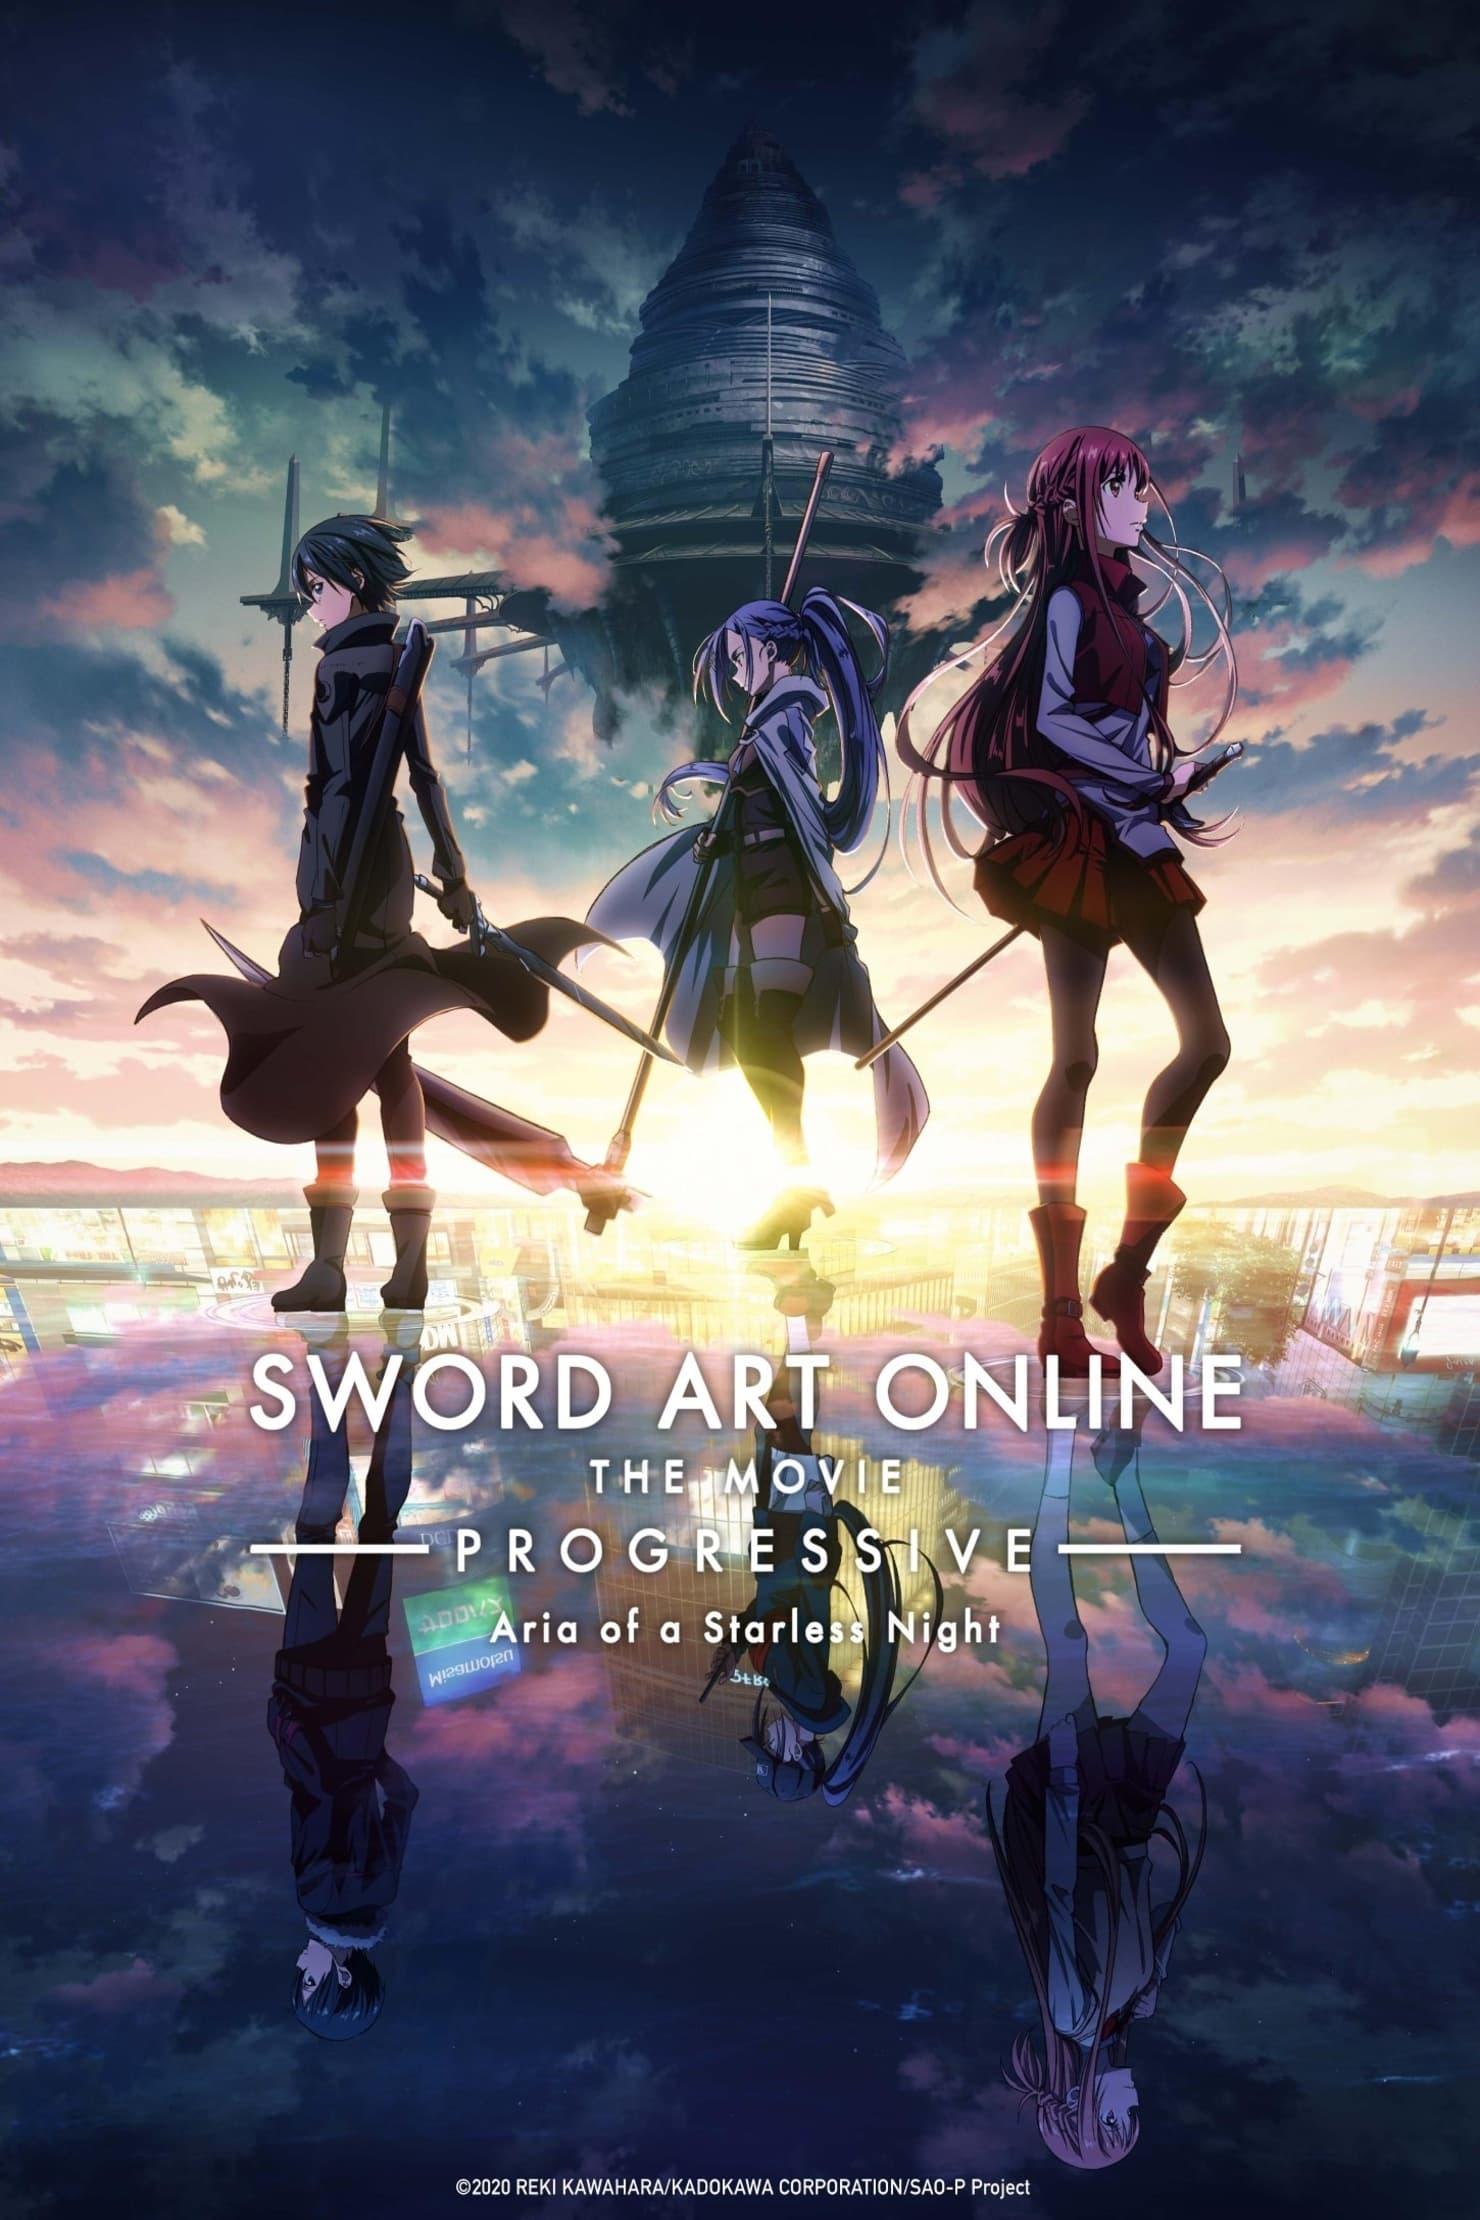 Sword Art Online the Movie – Progressive – Aria of a Starless Night poster